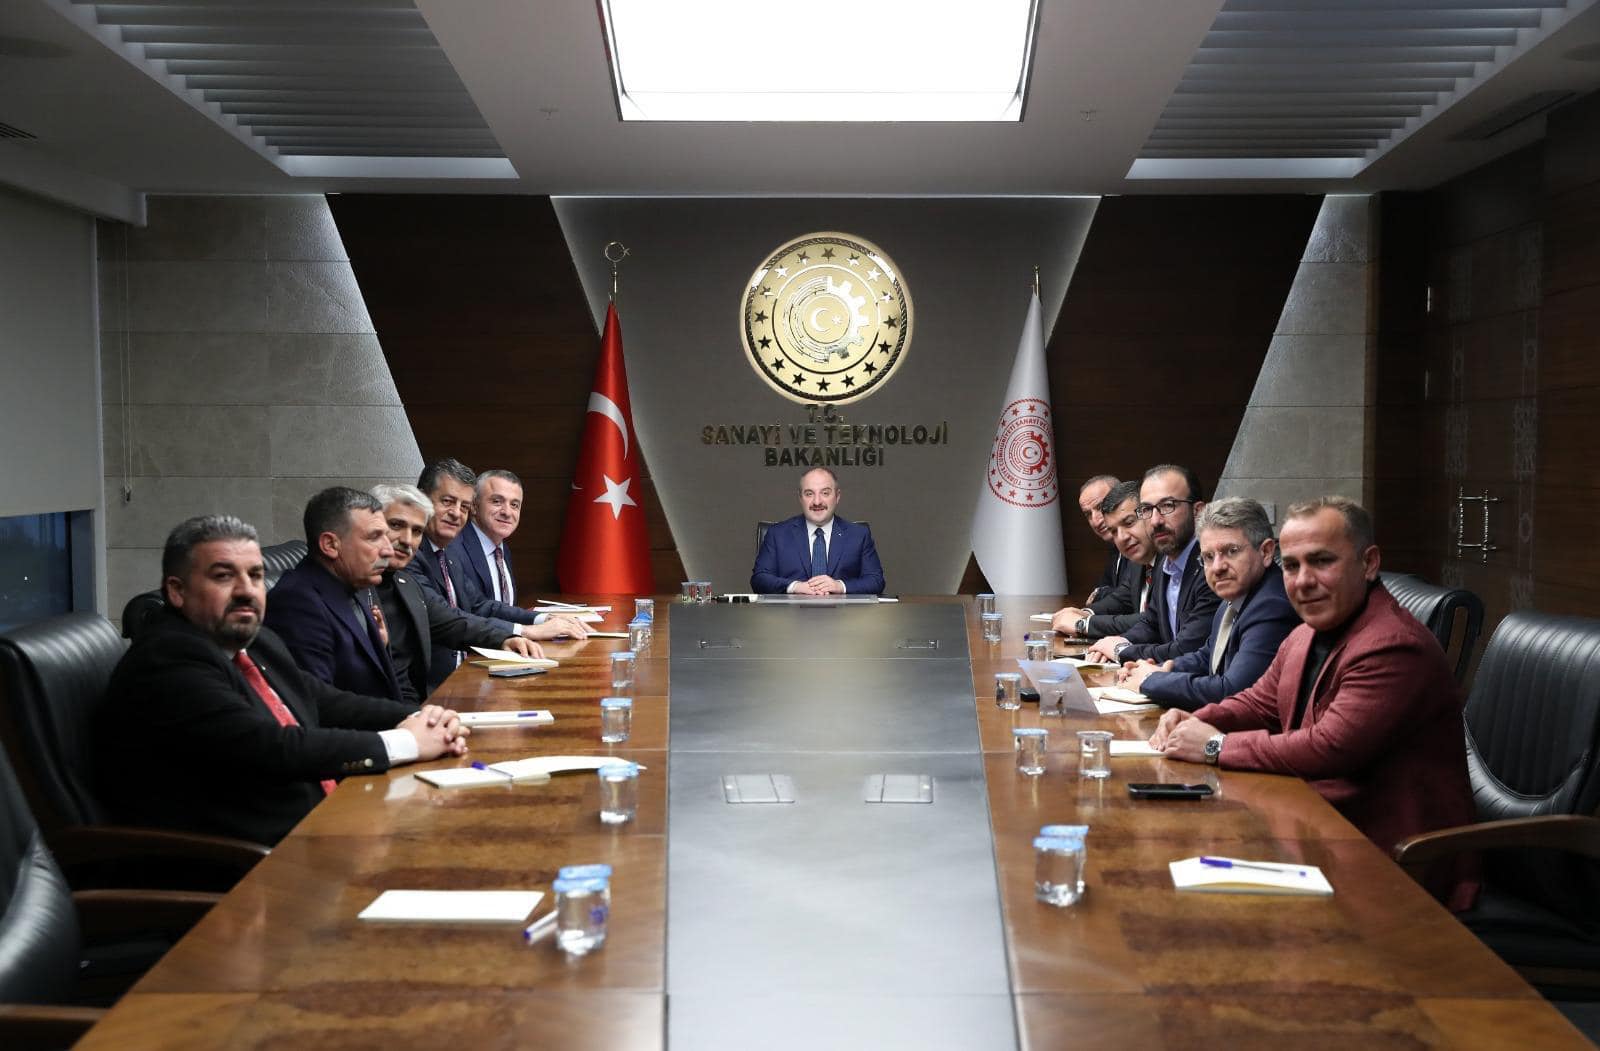 Sanayi ve Teknoloji Bakanı Mustafa Varank’a Ziyaret